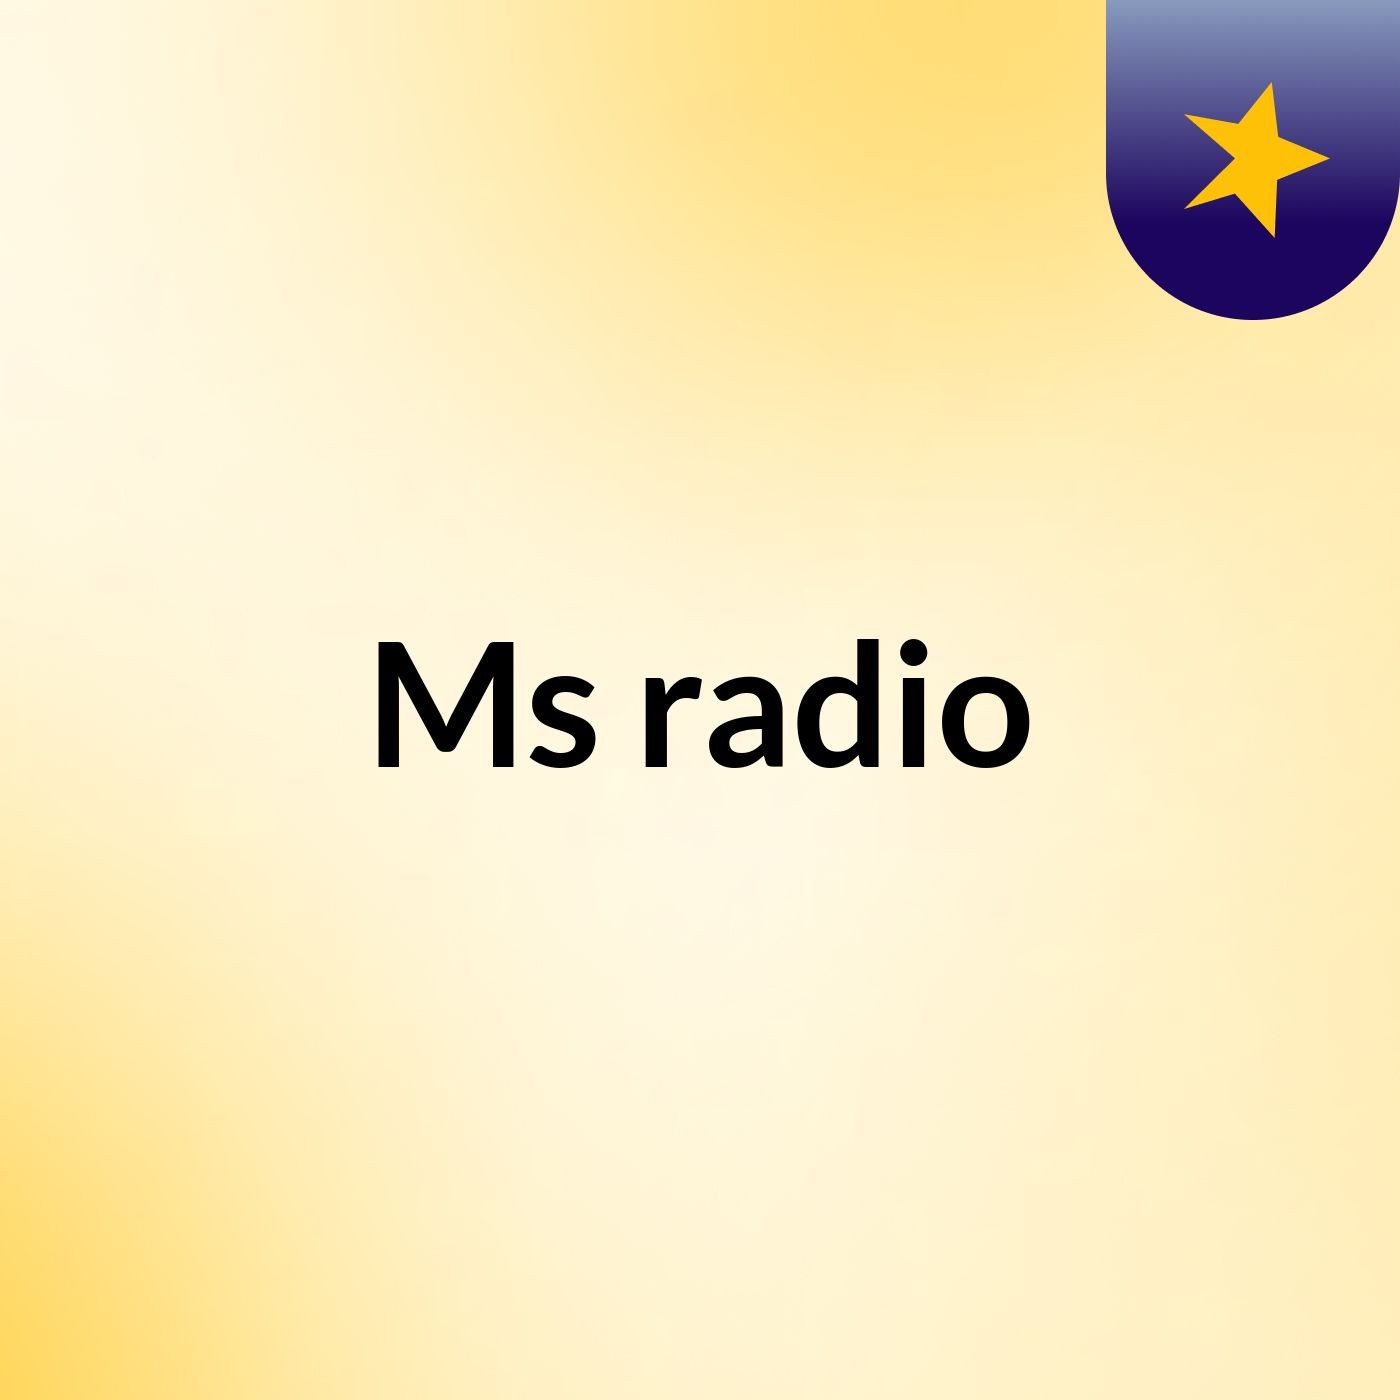 Ms radio